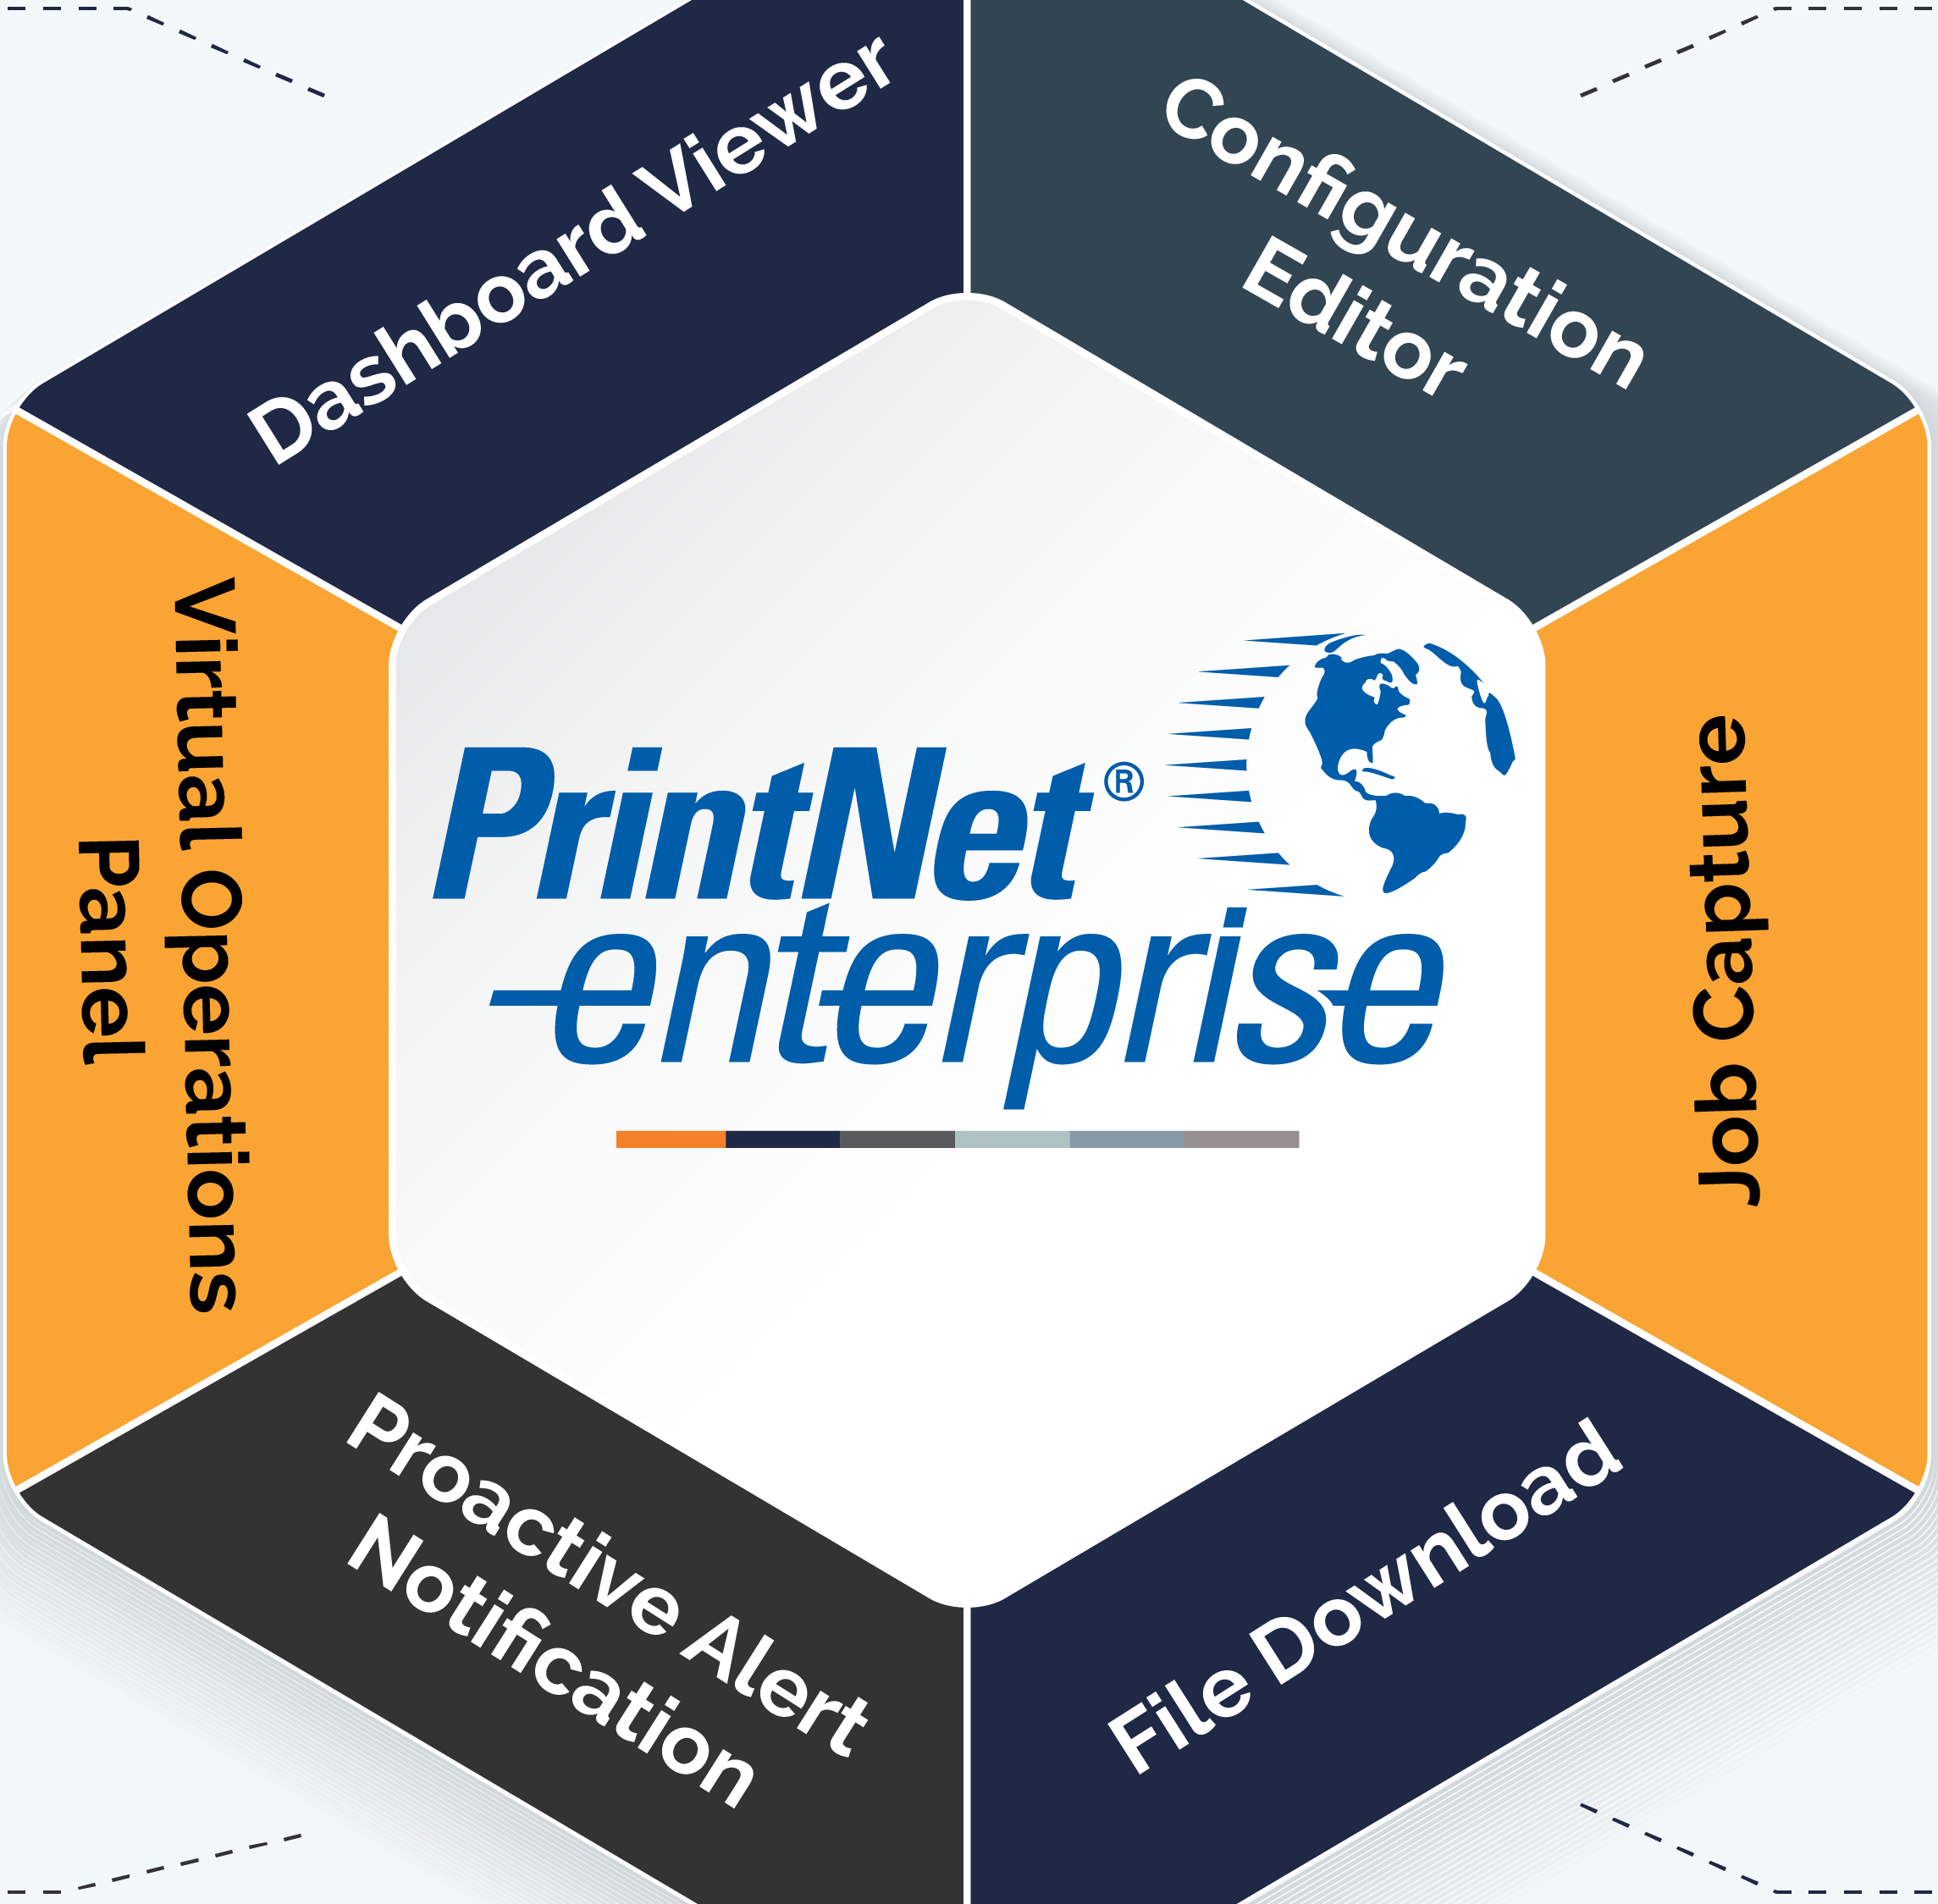 Featured image for “Printronix PrintNet Enterprise”